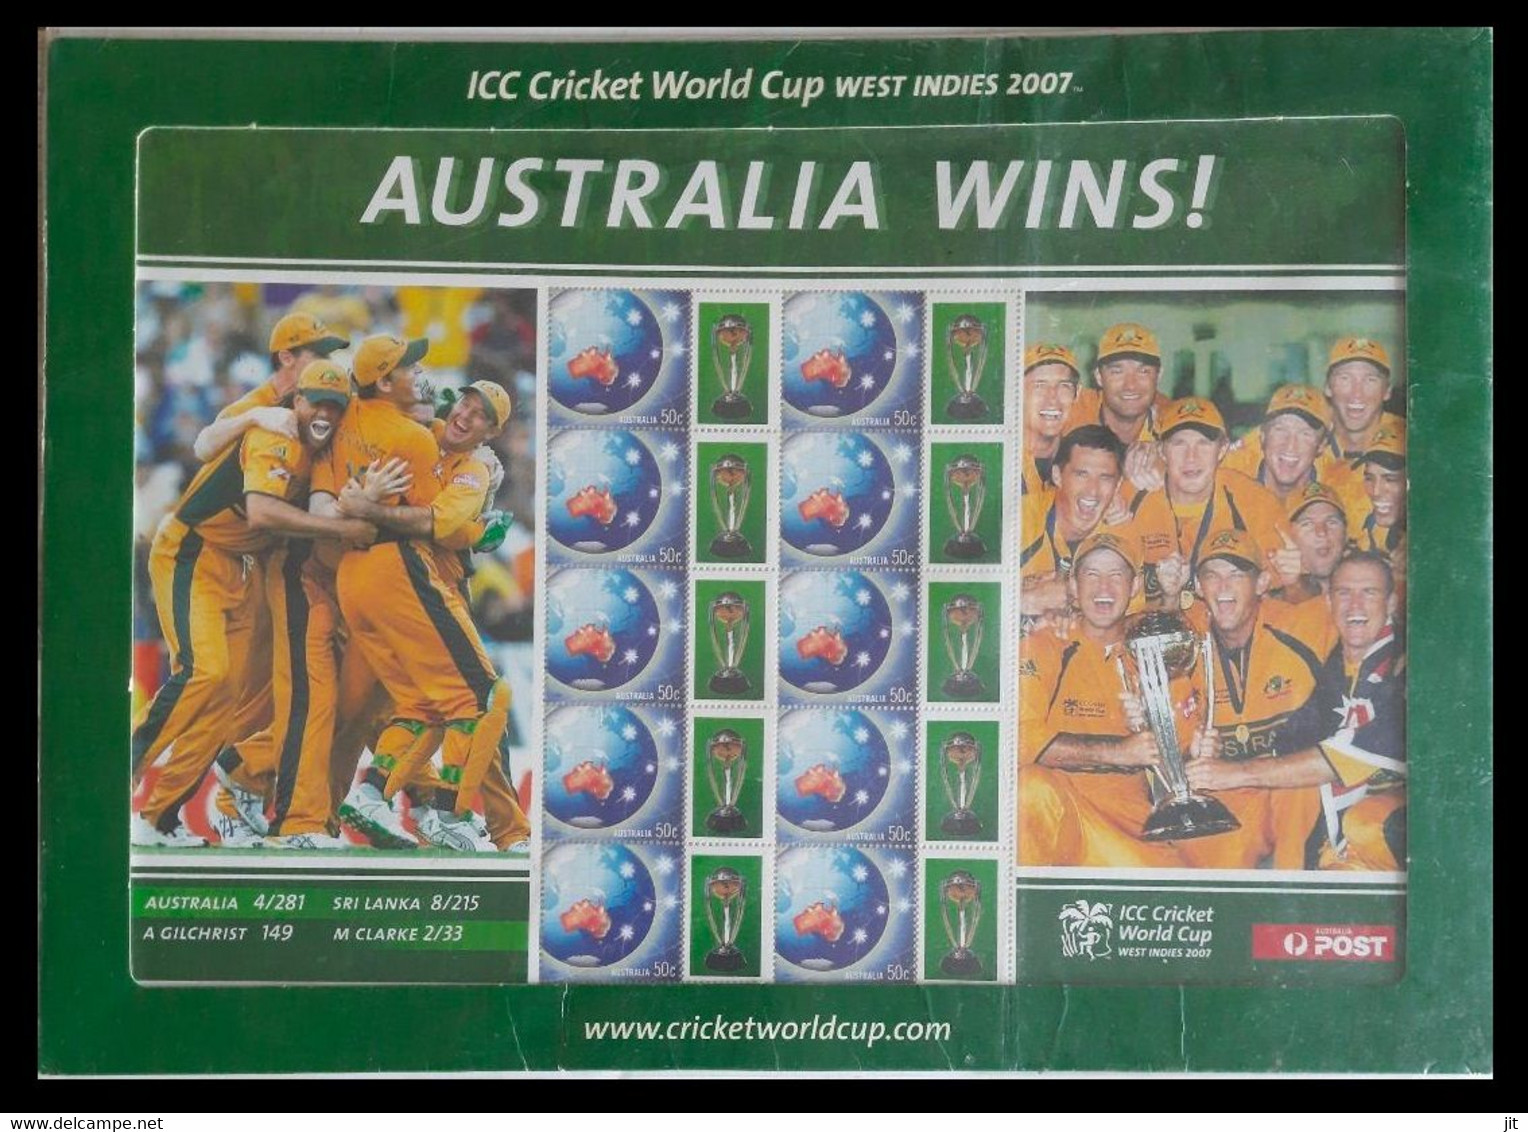 166. AUSTRALIA 2007 STAMP SHEET AUSTRALIA WINS !! ICC CRICKET WORLD CUP .MNH - Feuilles, Planches  Et Multiples